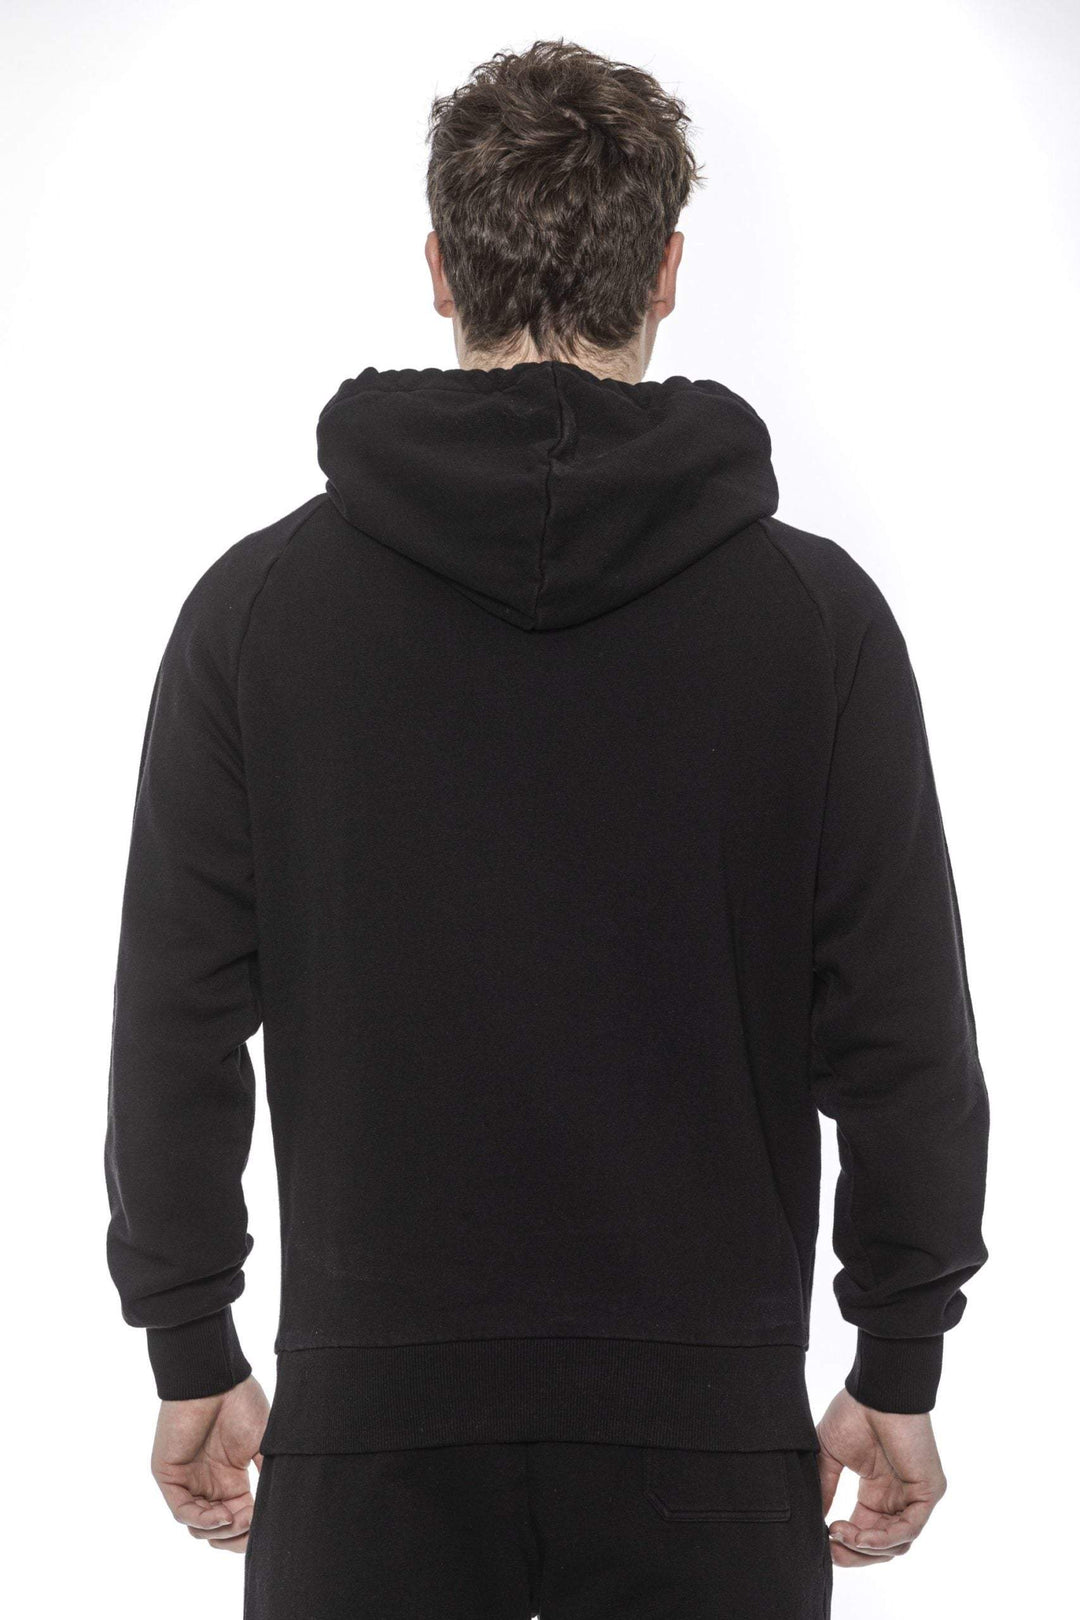 Tond Black Cotton Sweater #men, Black, feed-1, L, M, S, Sweaters - Men - Clothing, Tond at SEYMAYKA